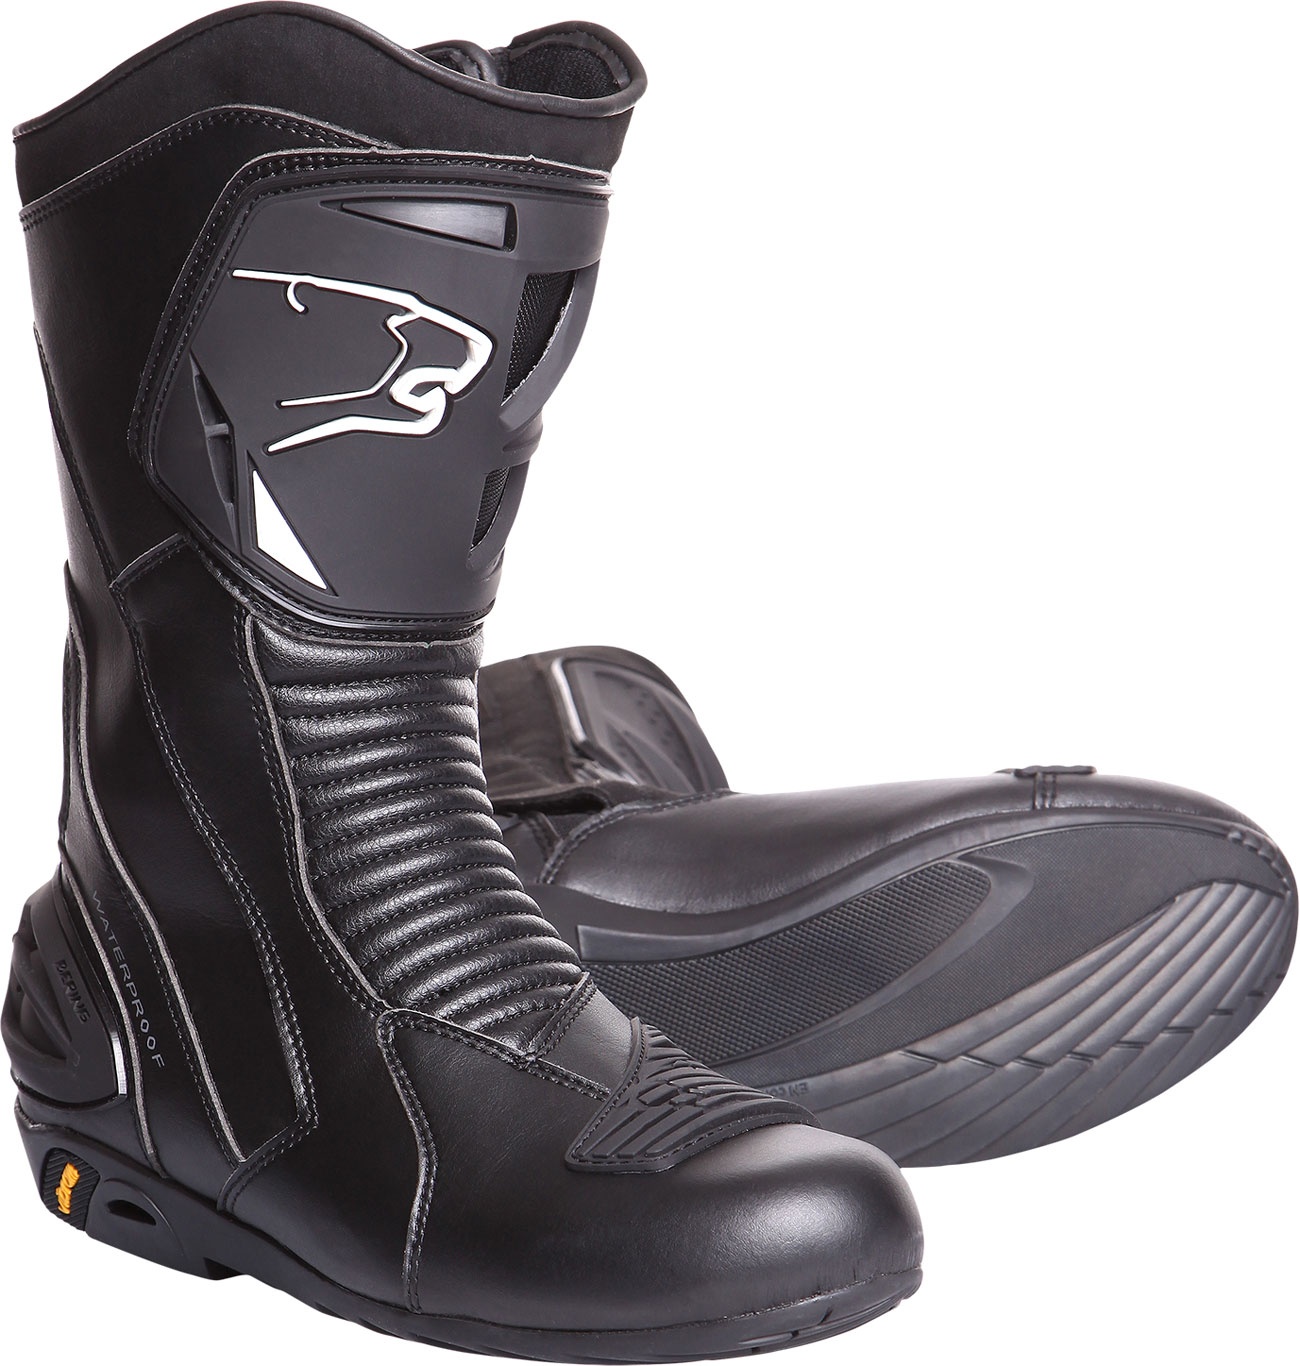 Bering X-Road, boots - Noir - T41